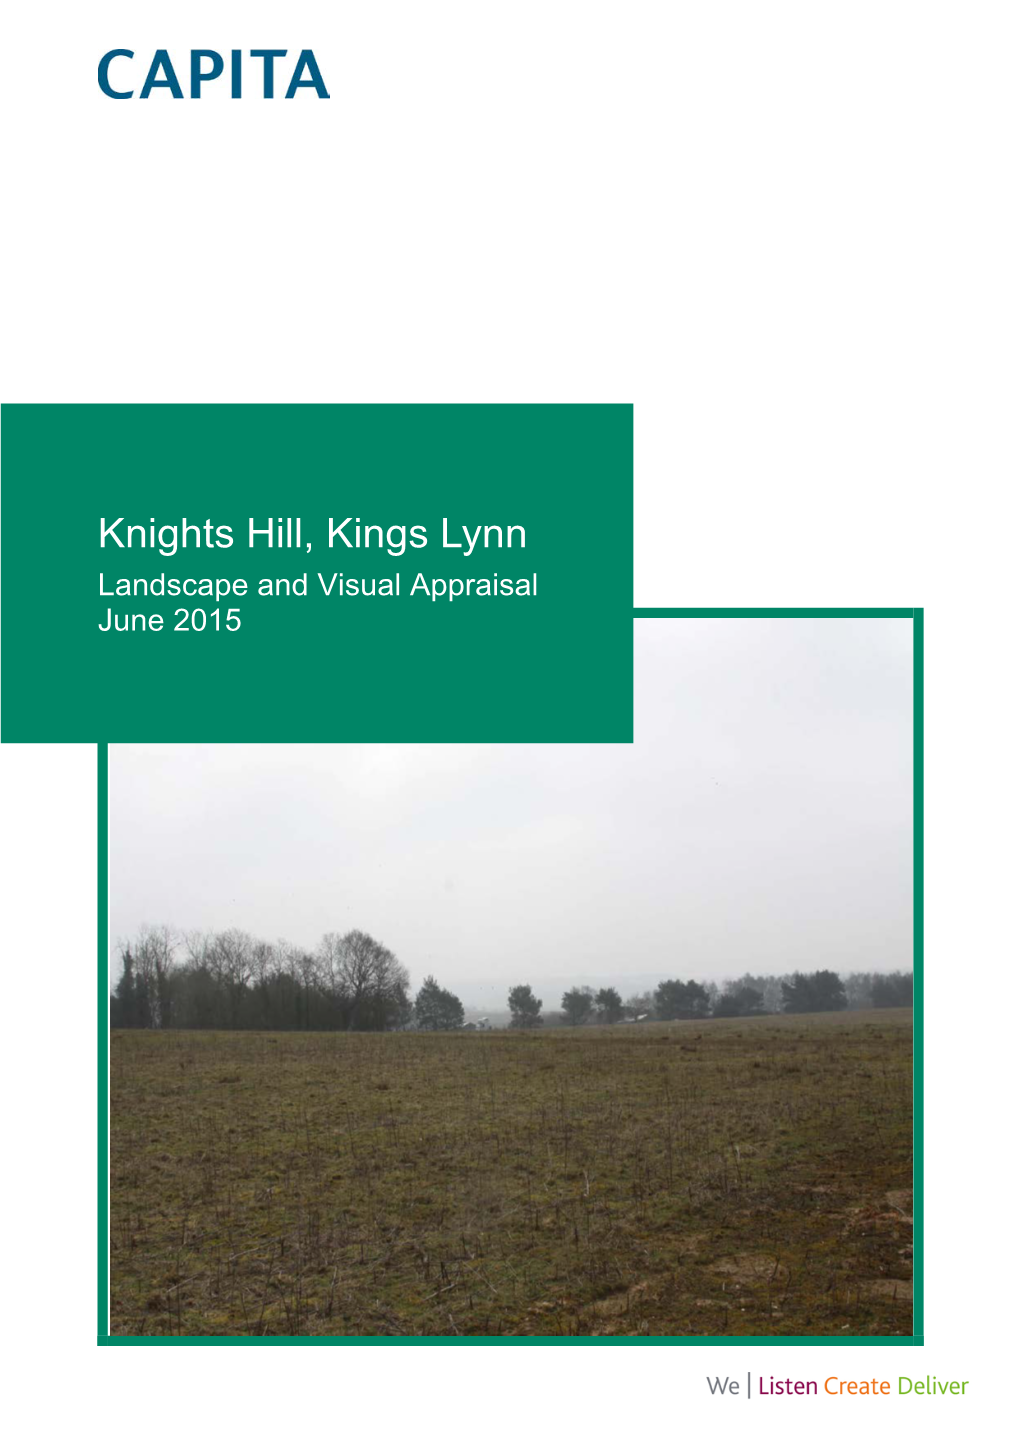 Knights Hill, Kings Lynn Landscape and Visual Appraisal June 2015